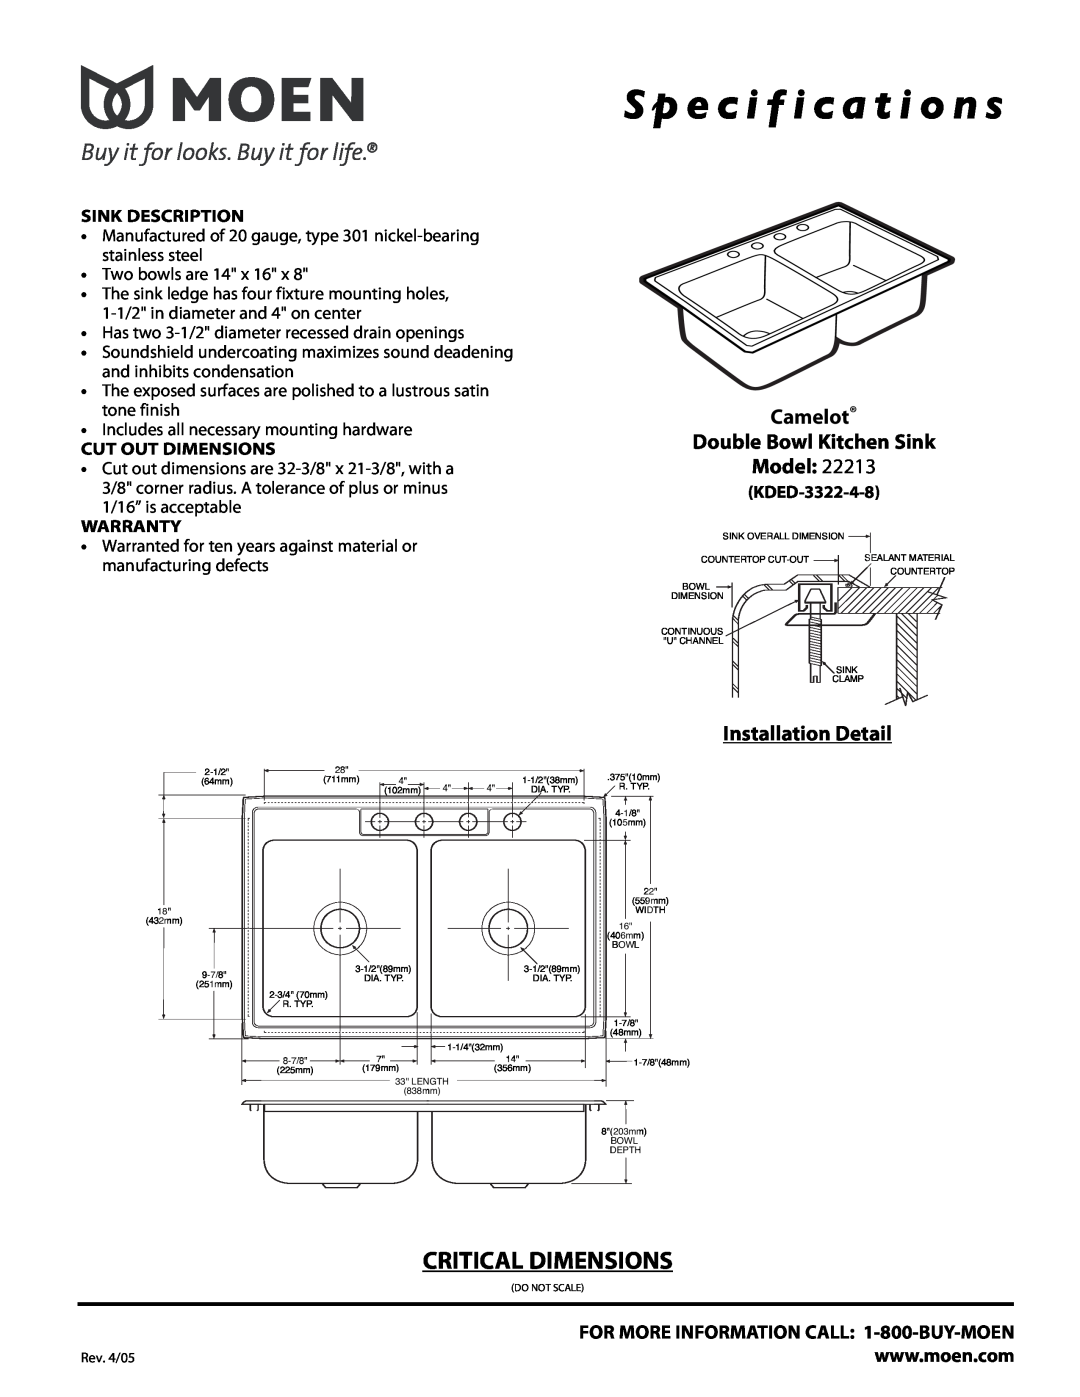 Moen 22213 specifications S p e c i f i c a t i o n s, Critical Dimensions, Camelot Double Bowl Kitchen Sink Model 